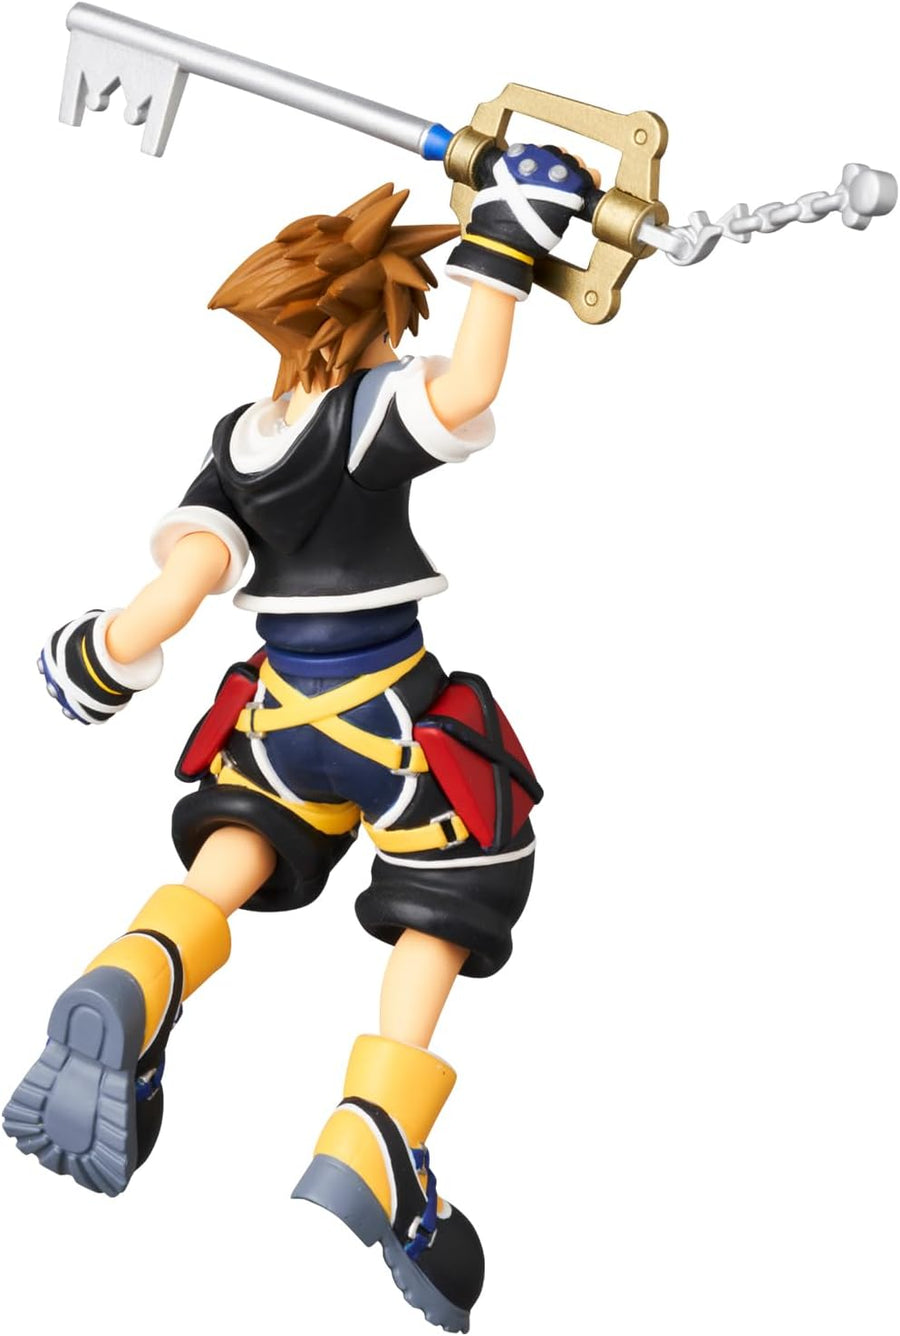 Sora - Kingdom Hearts II